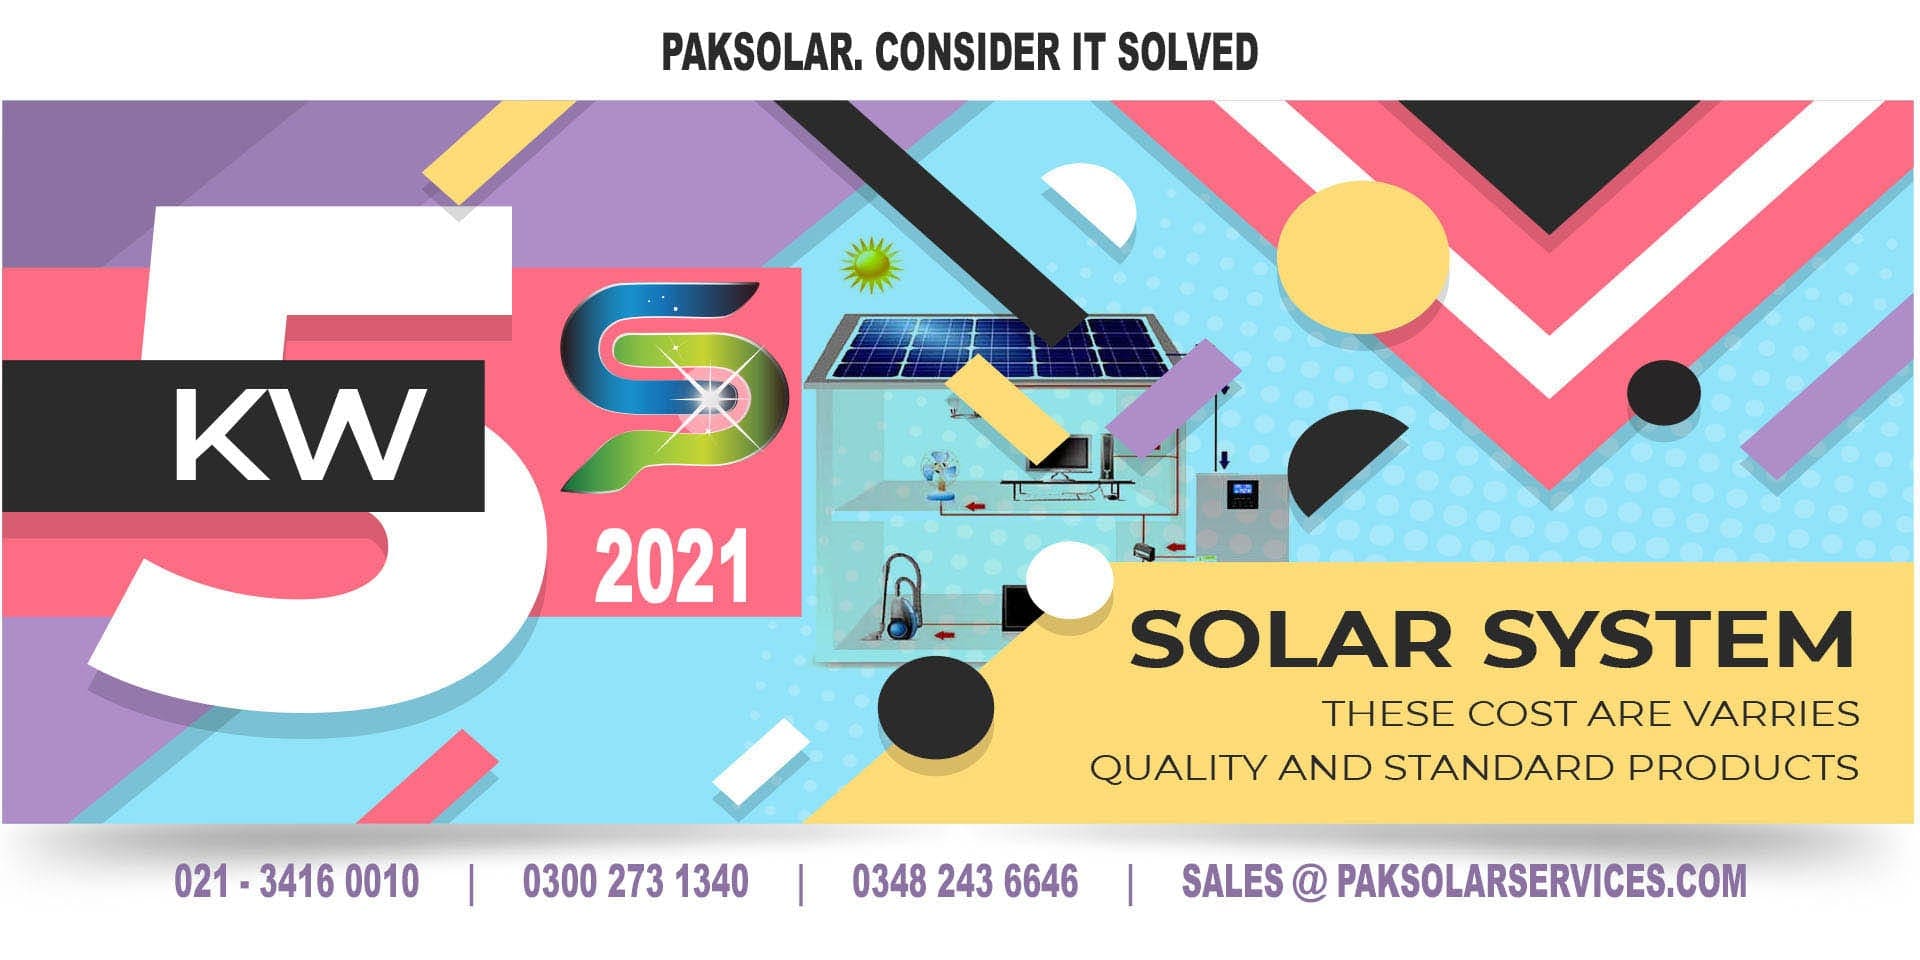 5kw solar system price in Pakistan